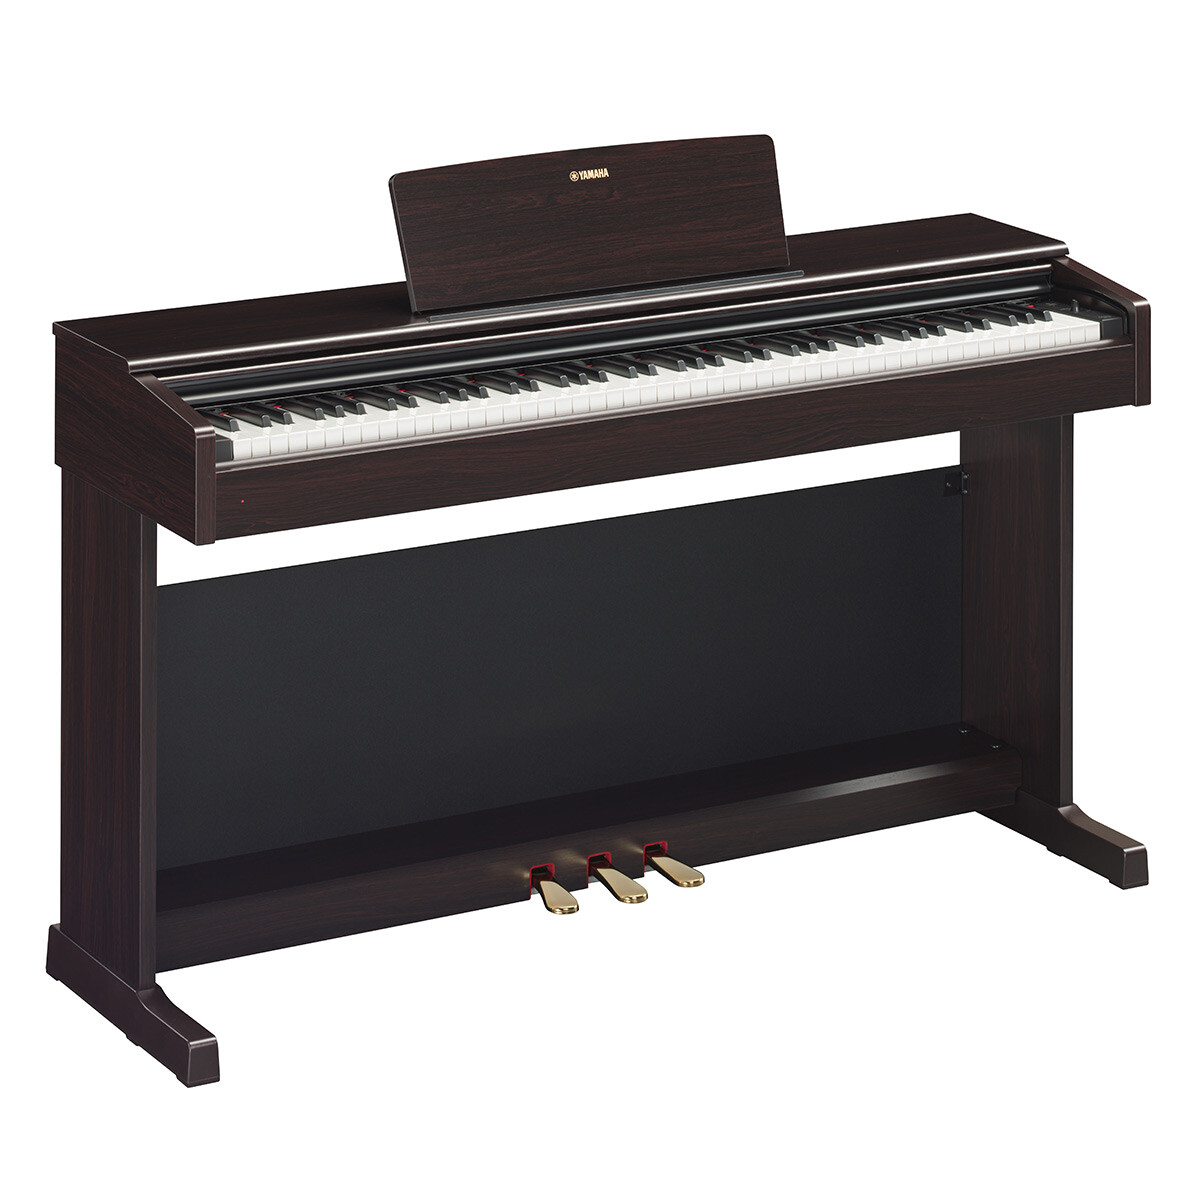 Piano Digital Yamaha Ydp144r Arius Rosewood 